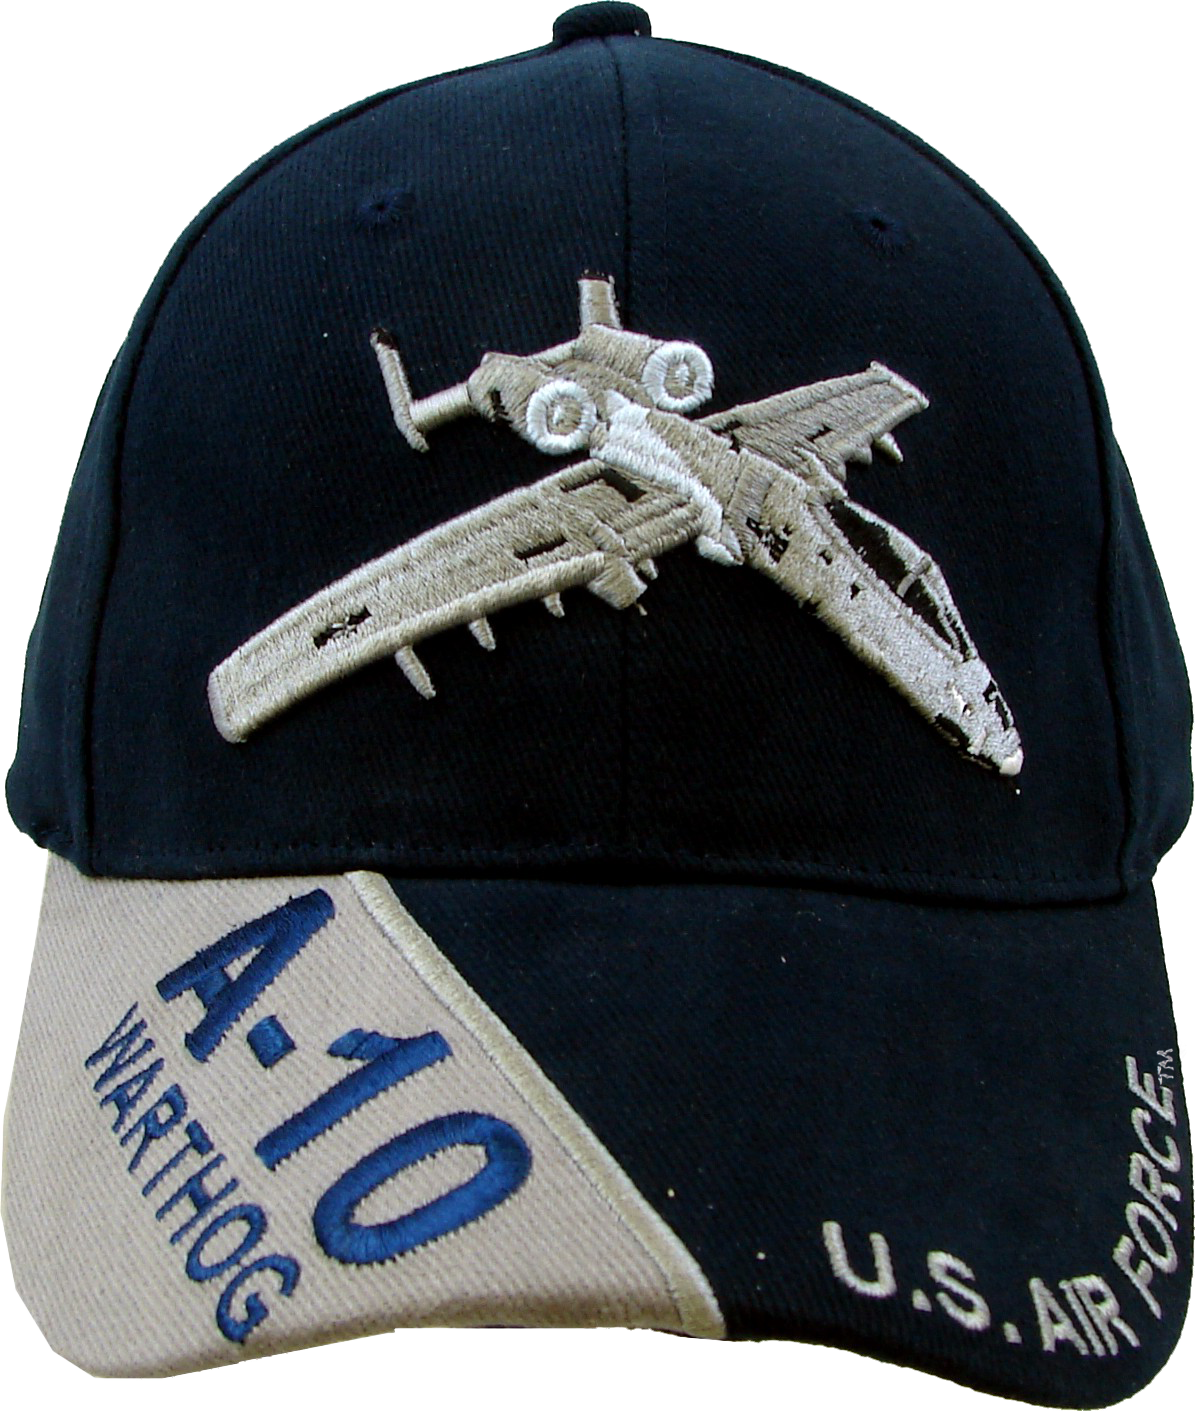 CAP-A-10 WARTHOG (DKN)